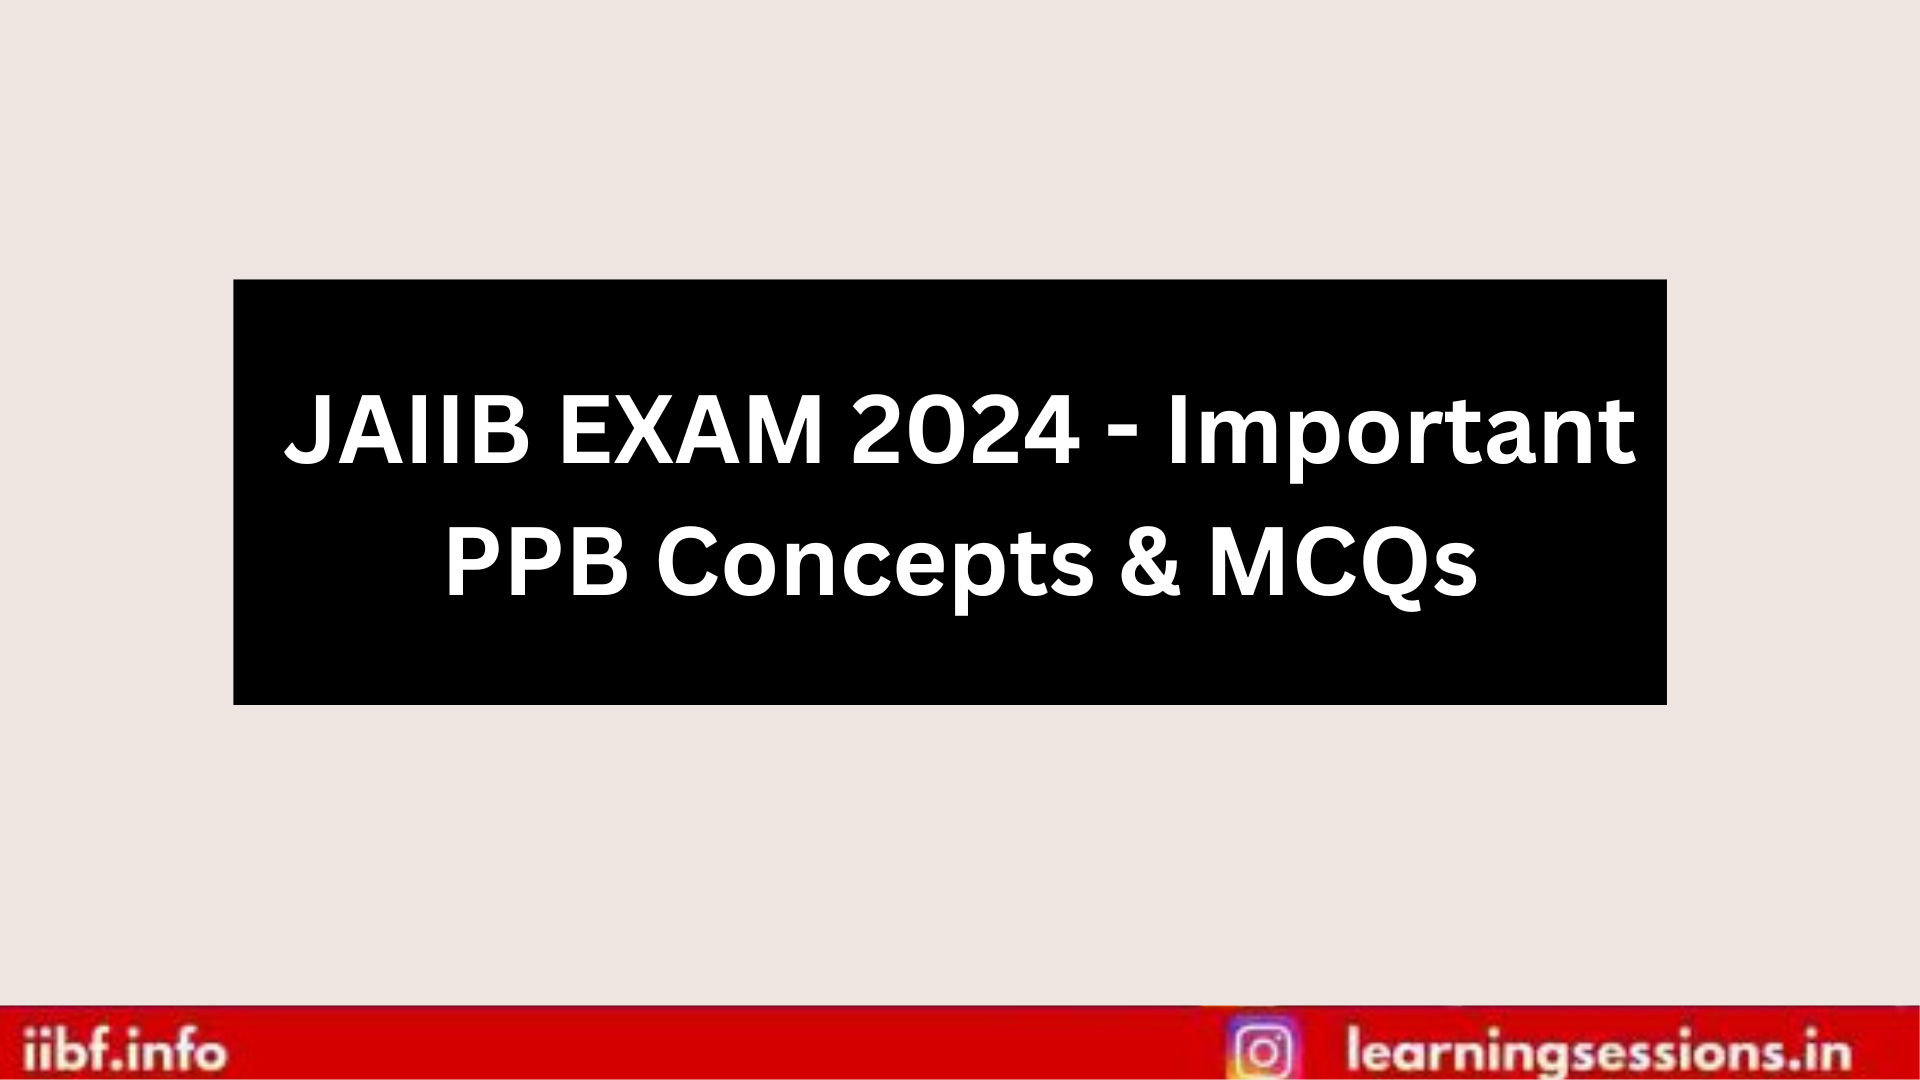 JAIIB EXAM 2024 - Important PPB Concepts & MCQs